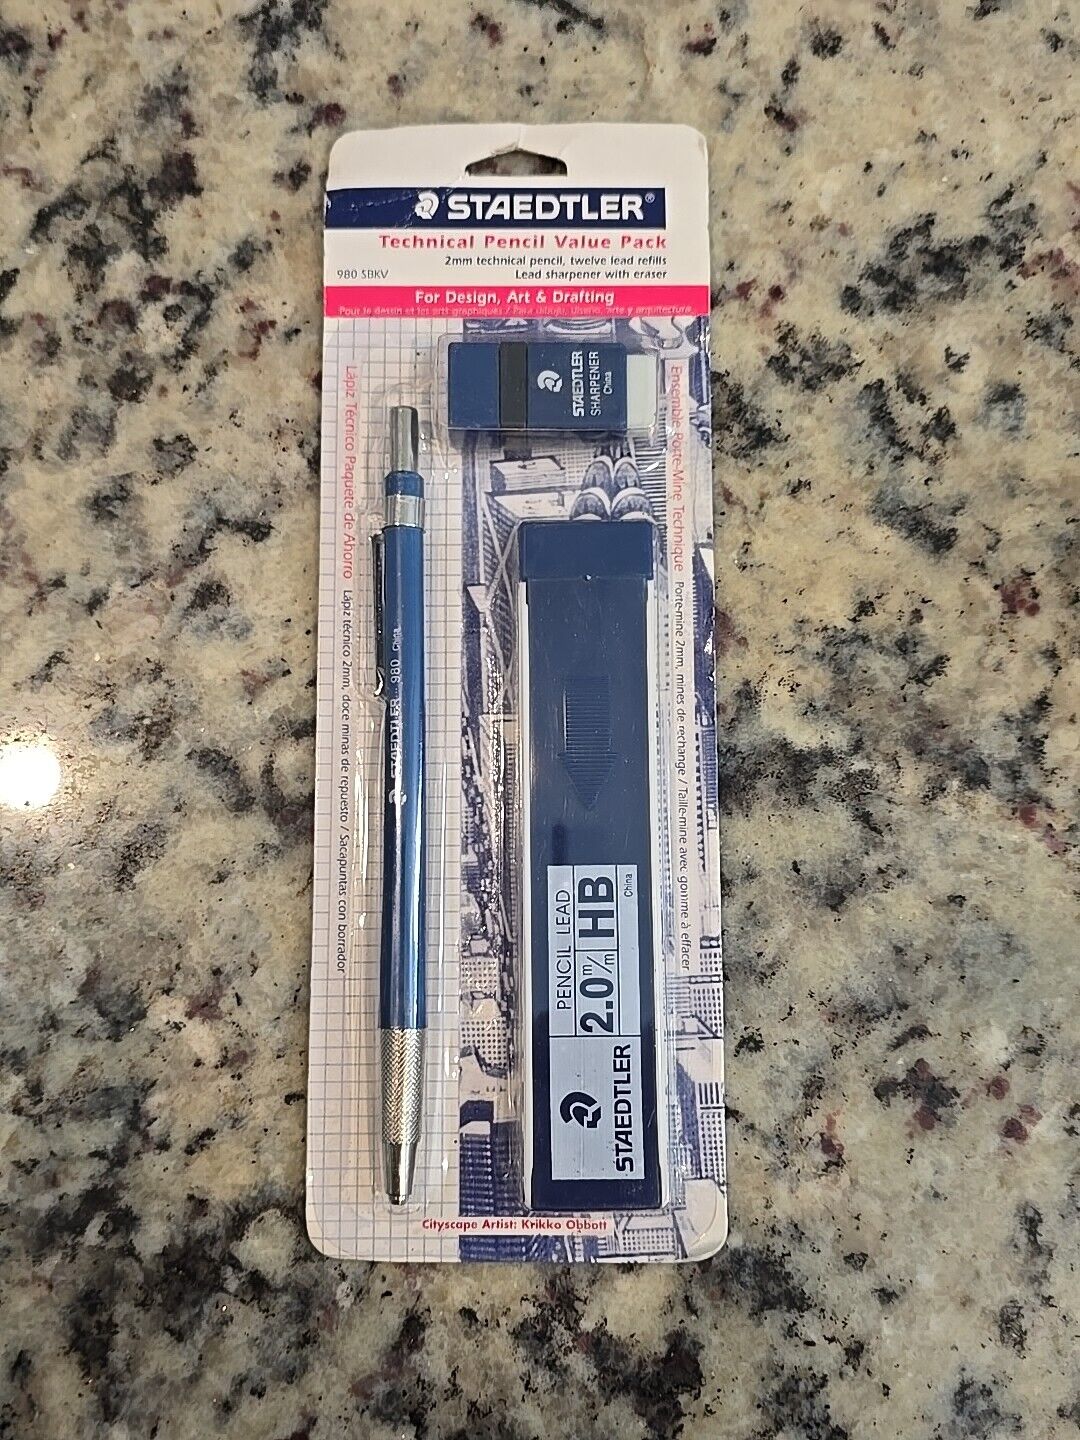 Vintage Staedtler Technical Pencil 2.0m With Lead Sharpener And Eraser 2002 NIB